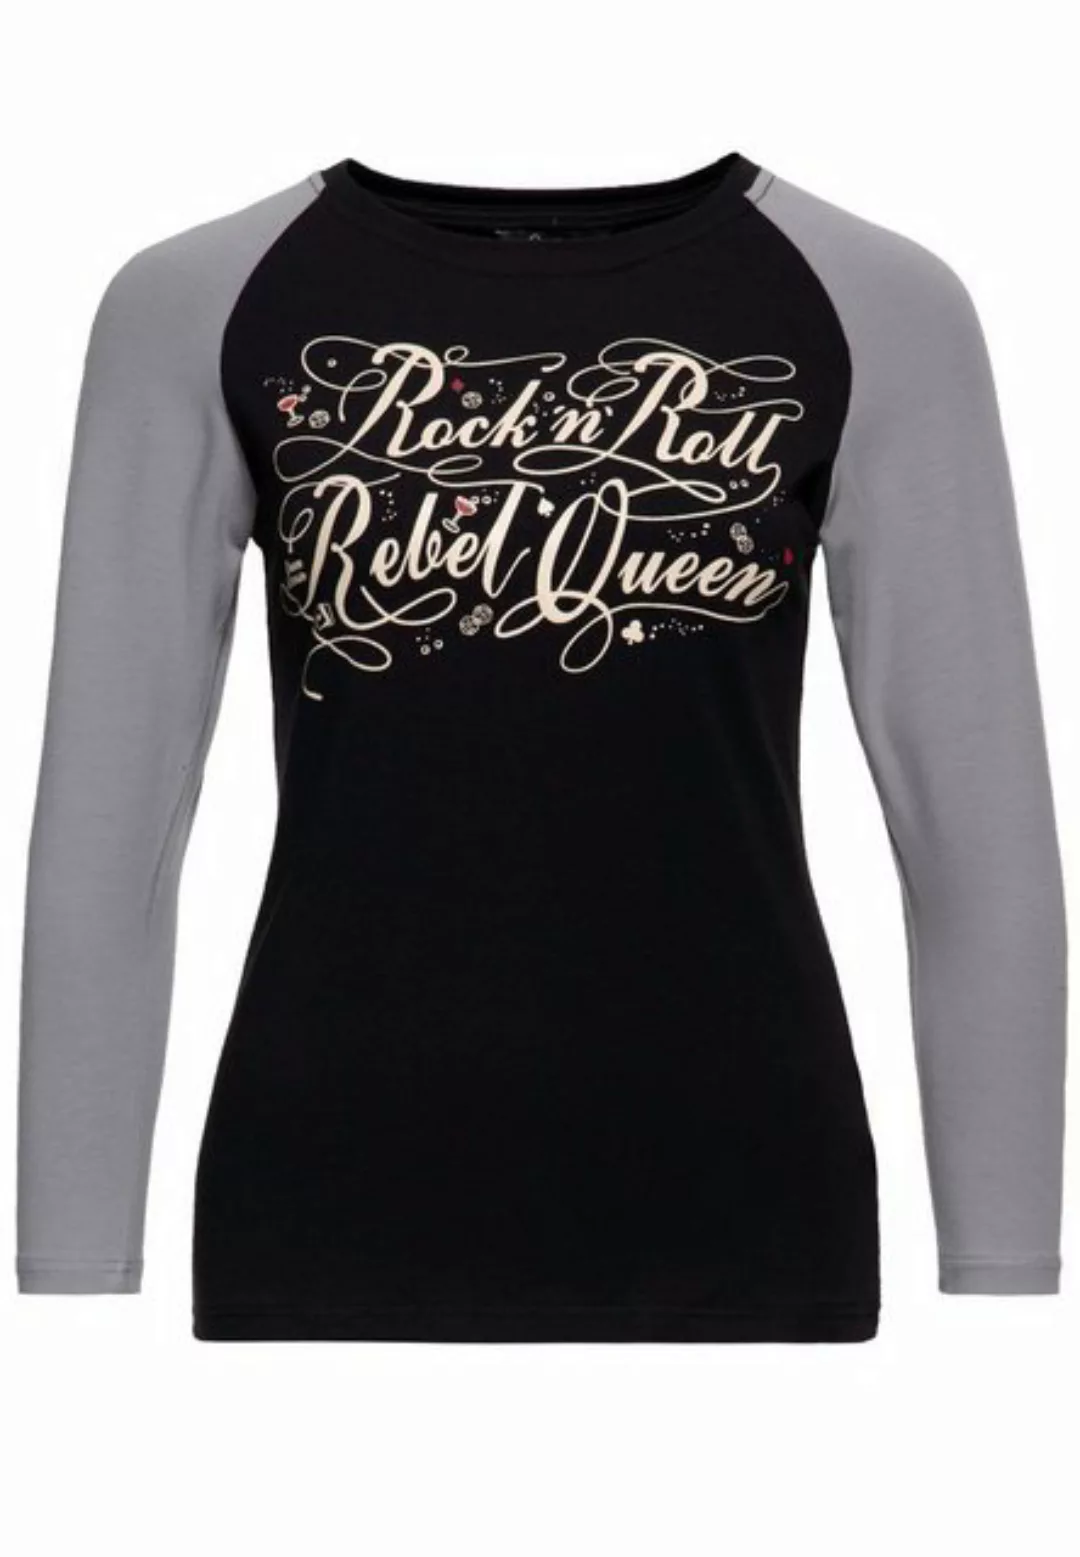 QueenKerosin Langarmshirt Rock'n'Roll Rebel Queen mit 3/4-Raglan-Ärmel günstig online kaufen